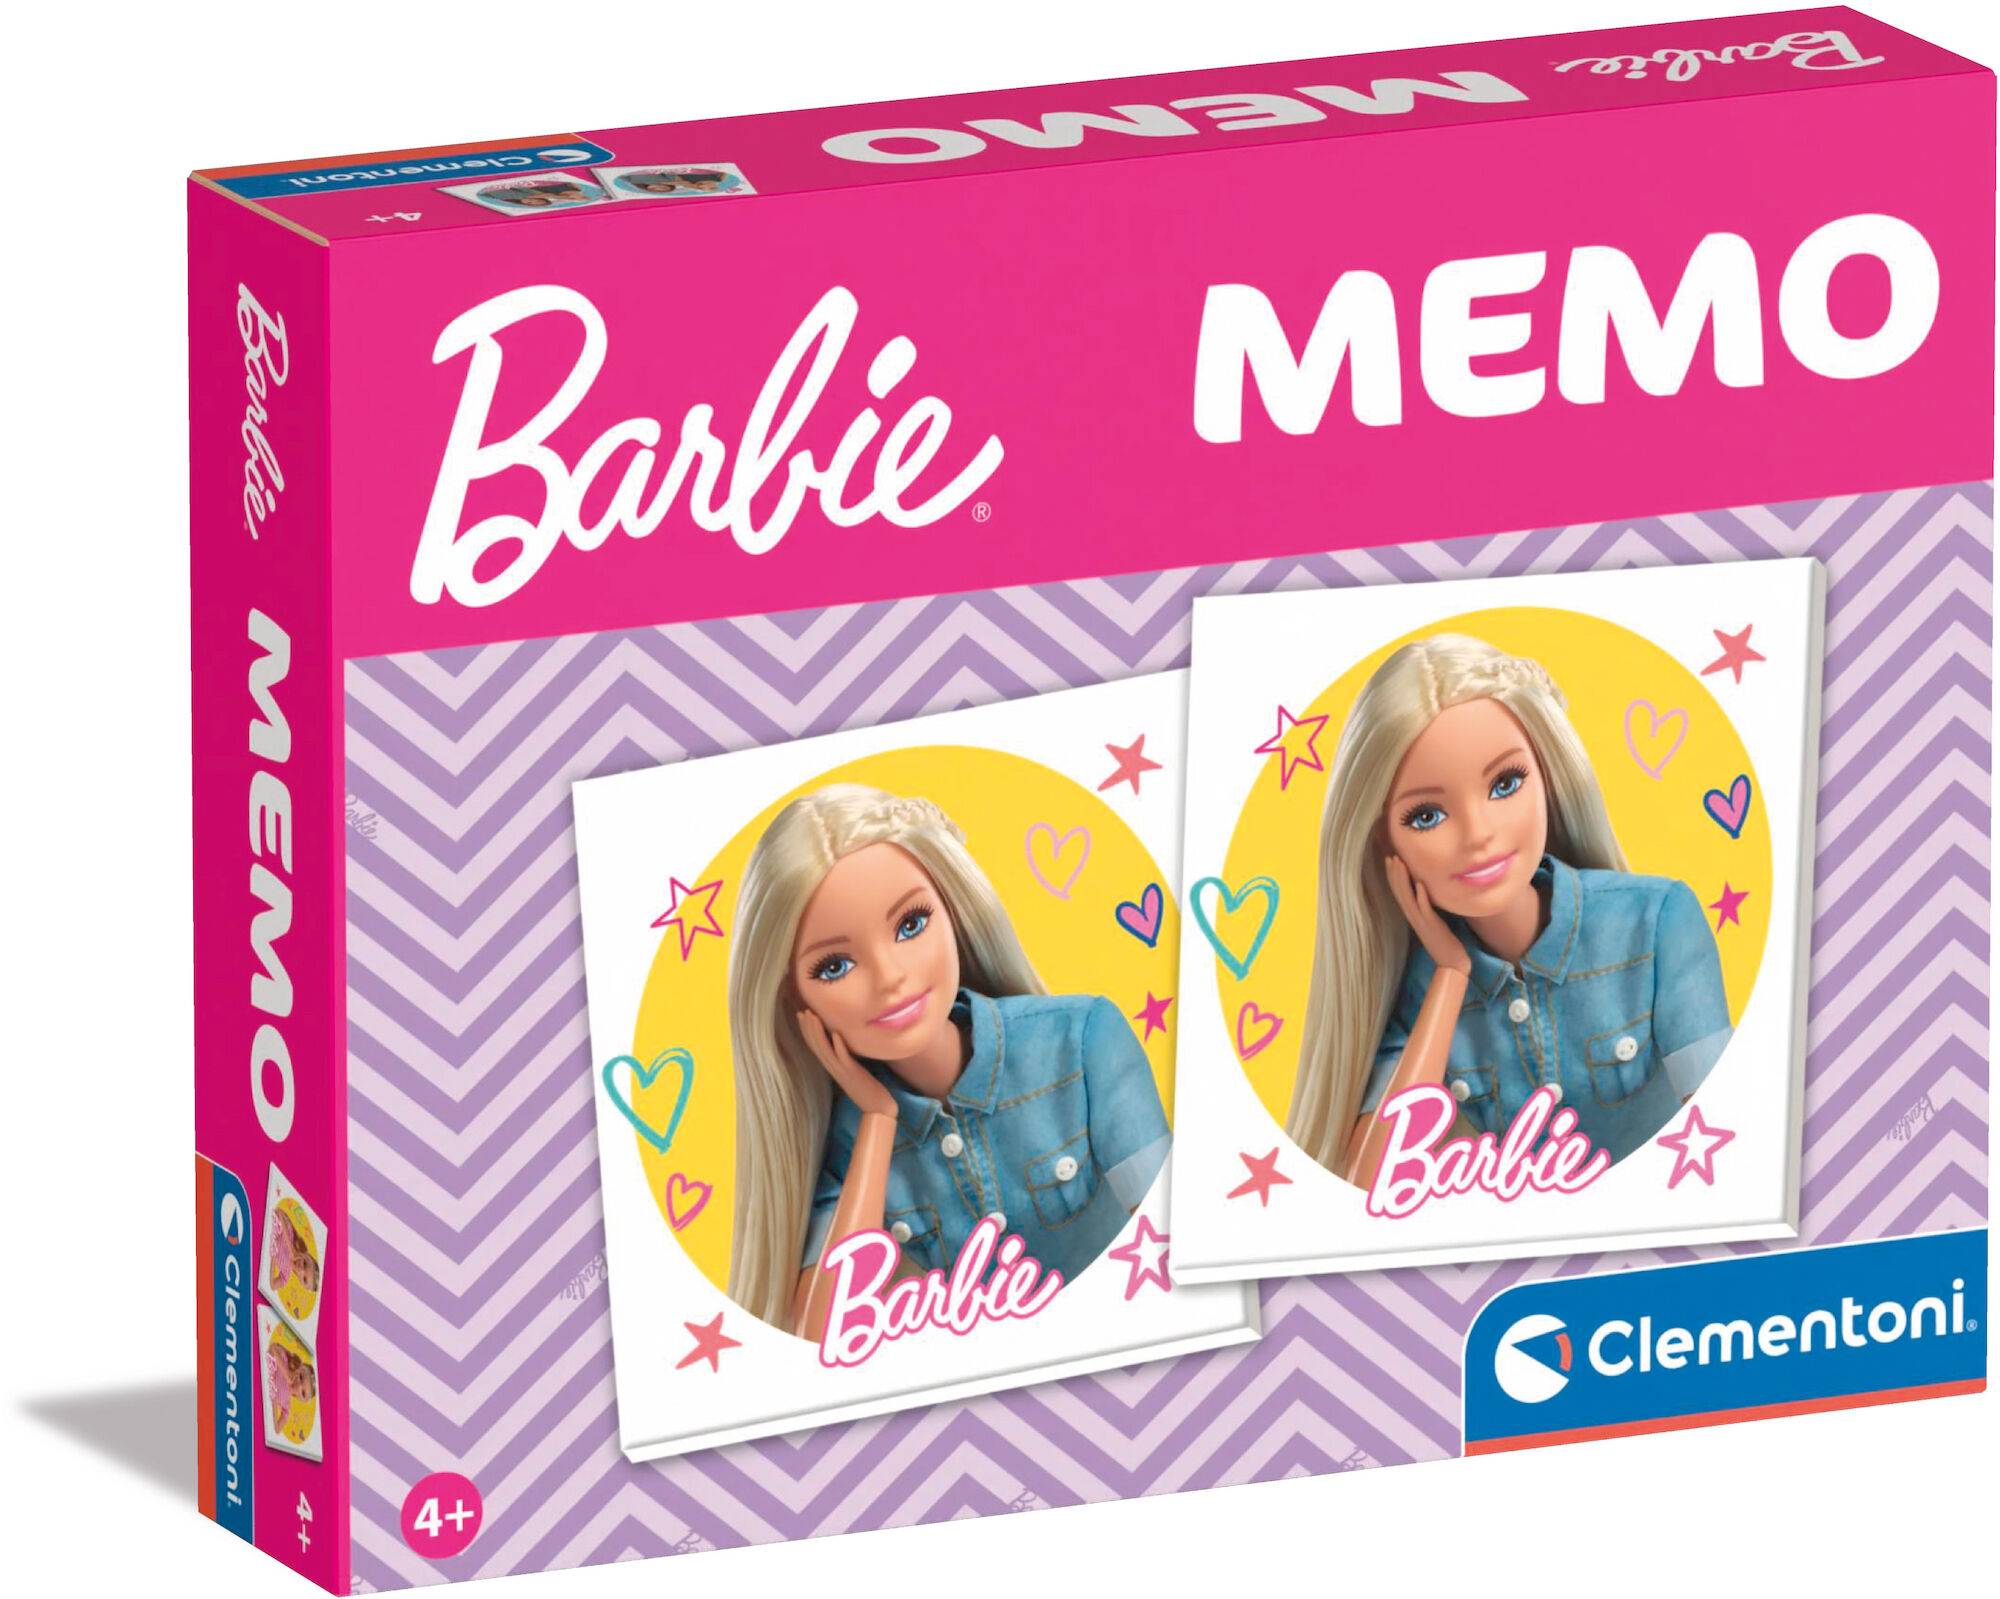 Clementoni Barbie Memo Pocket